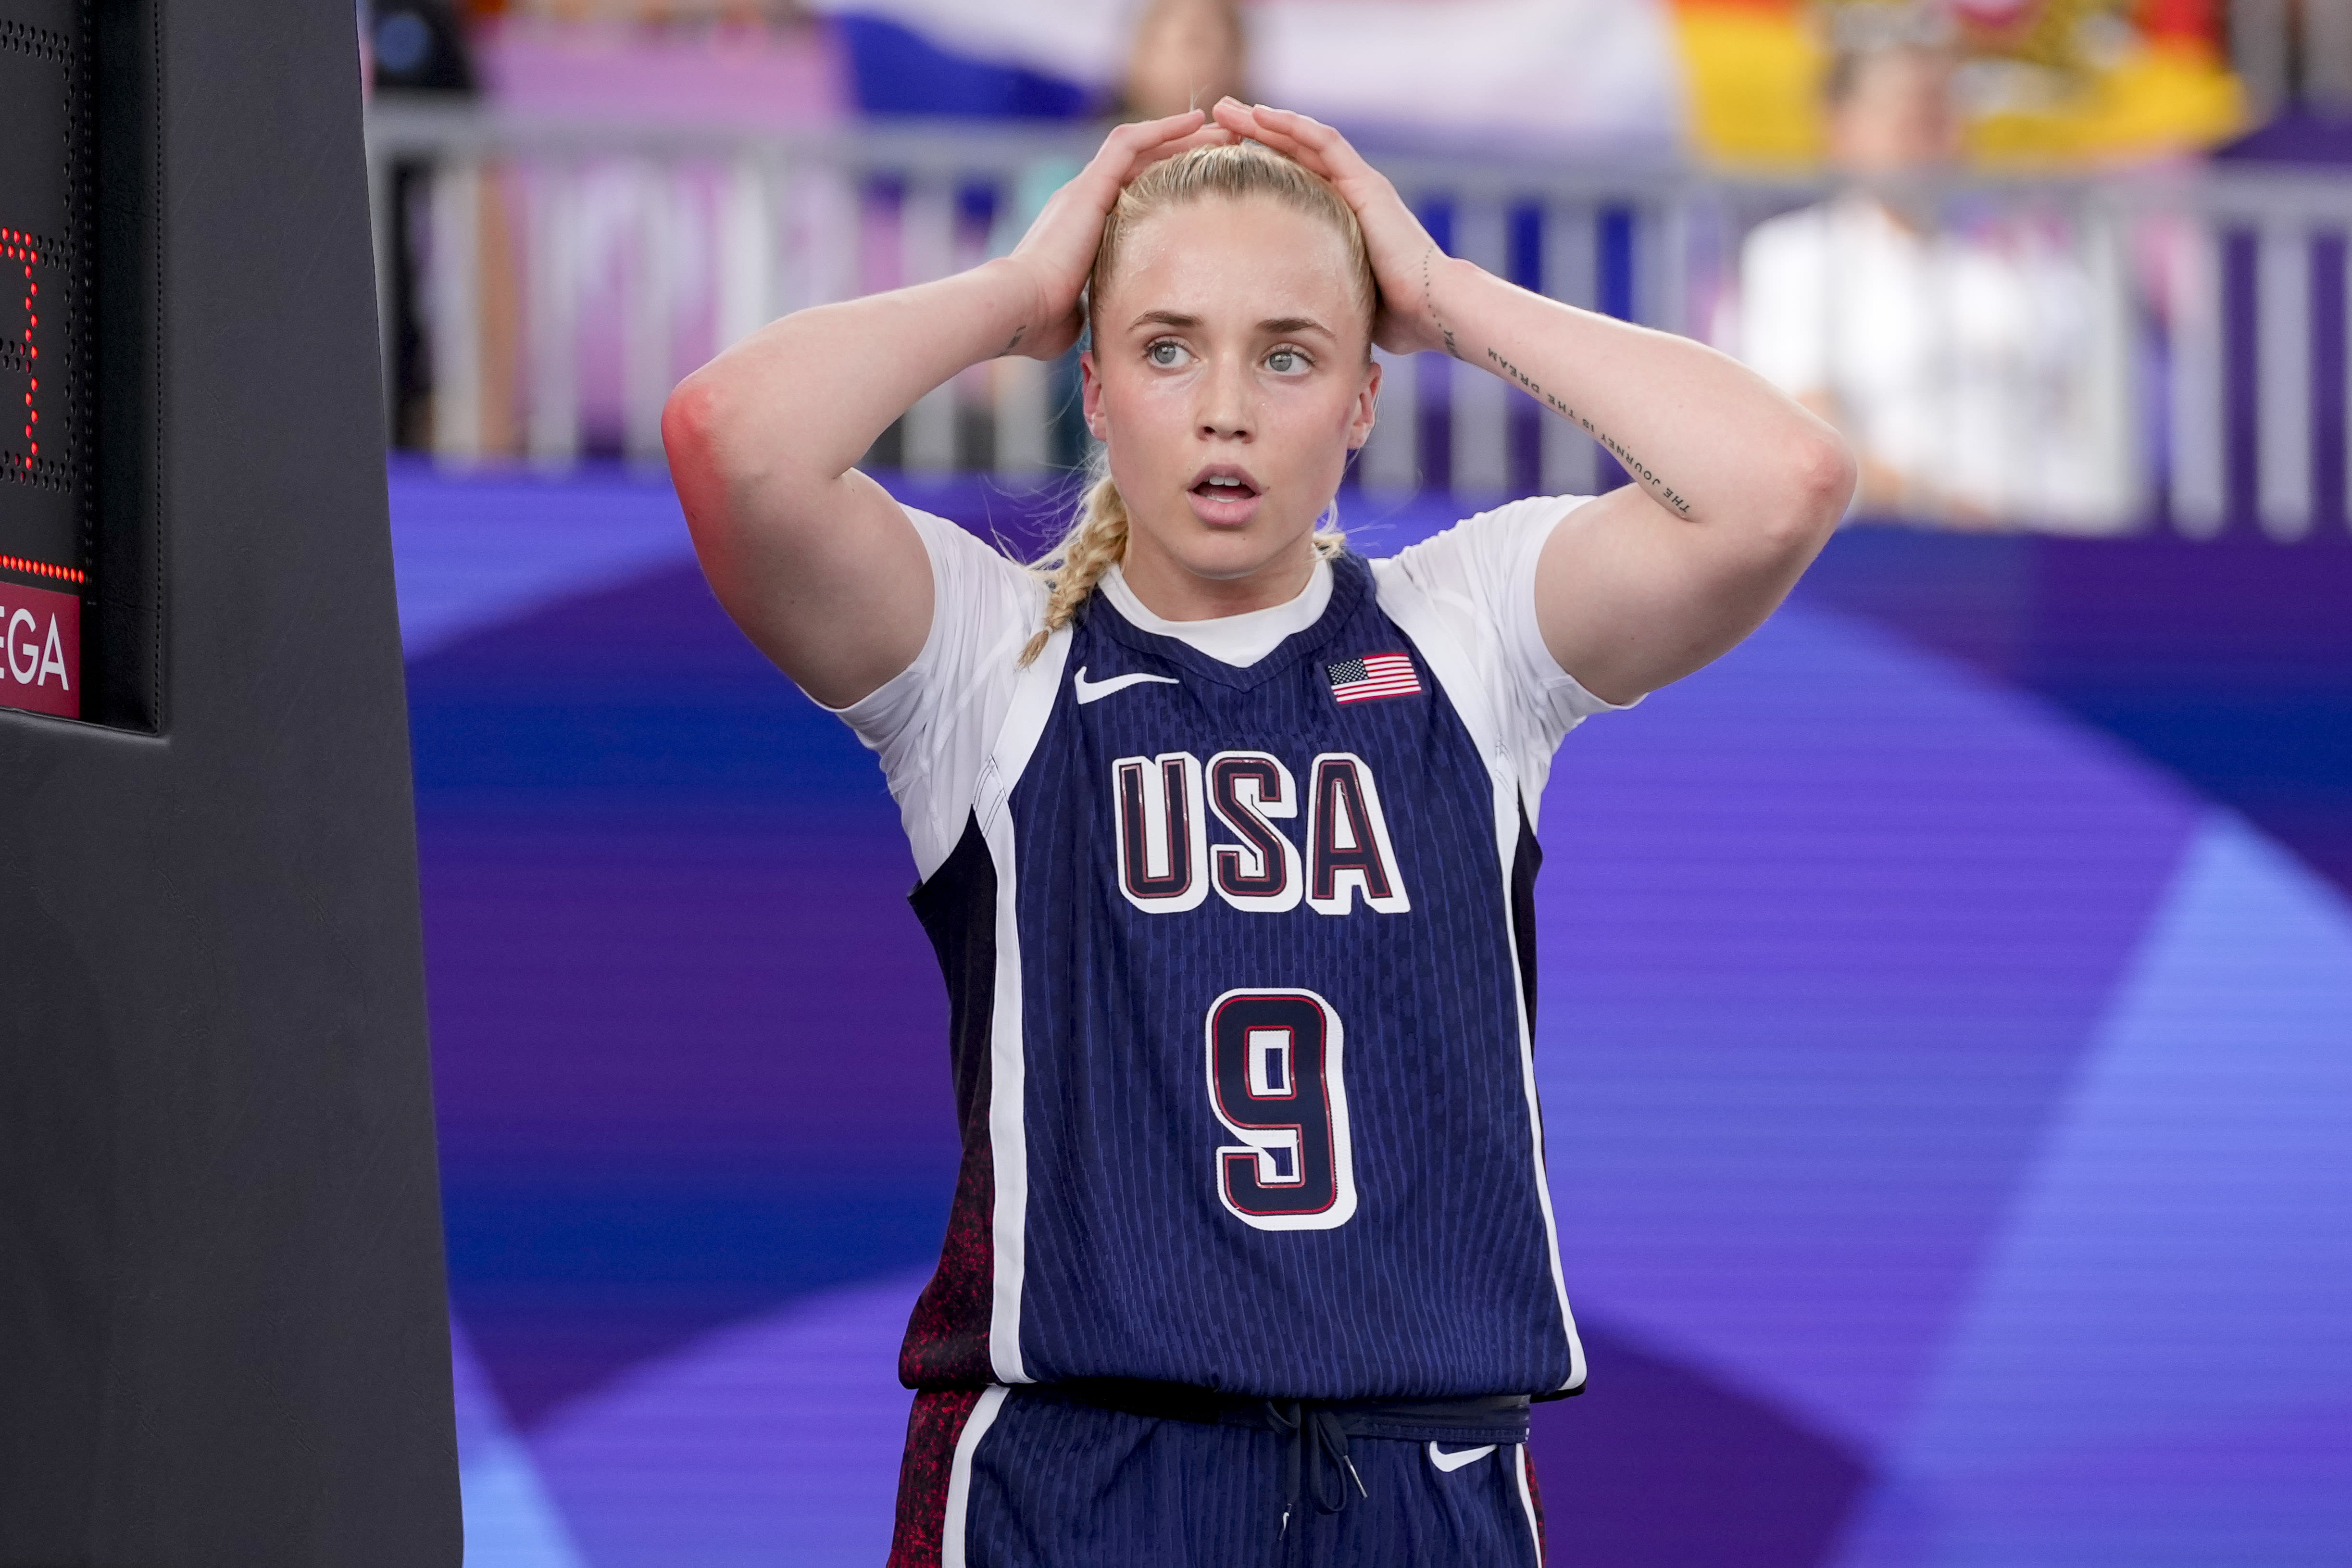 2024 Olympics: U.S. 3x3 women's basketball team falls in opener against Germany